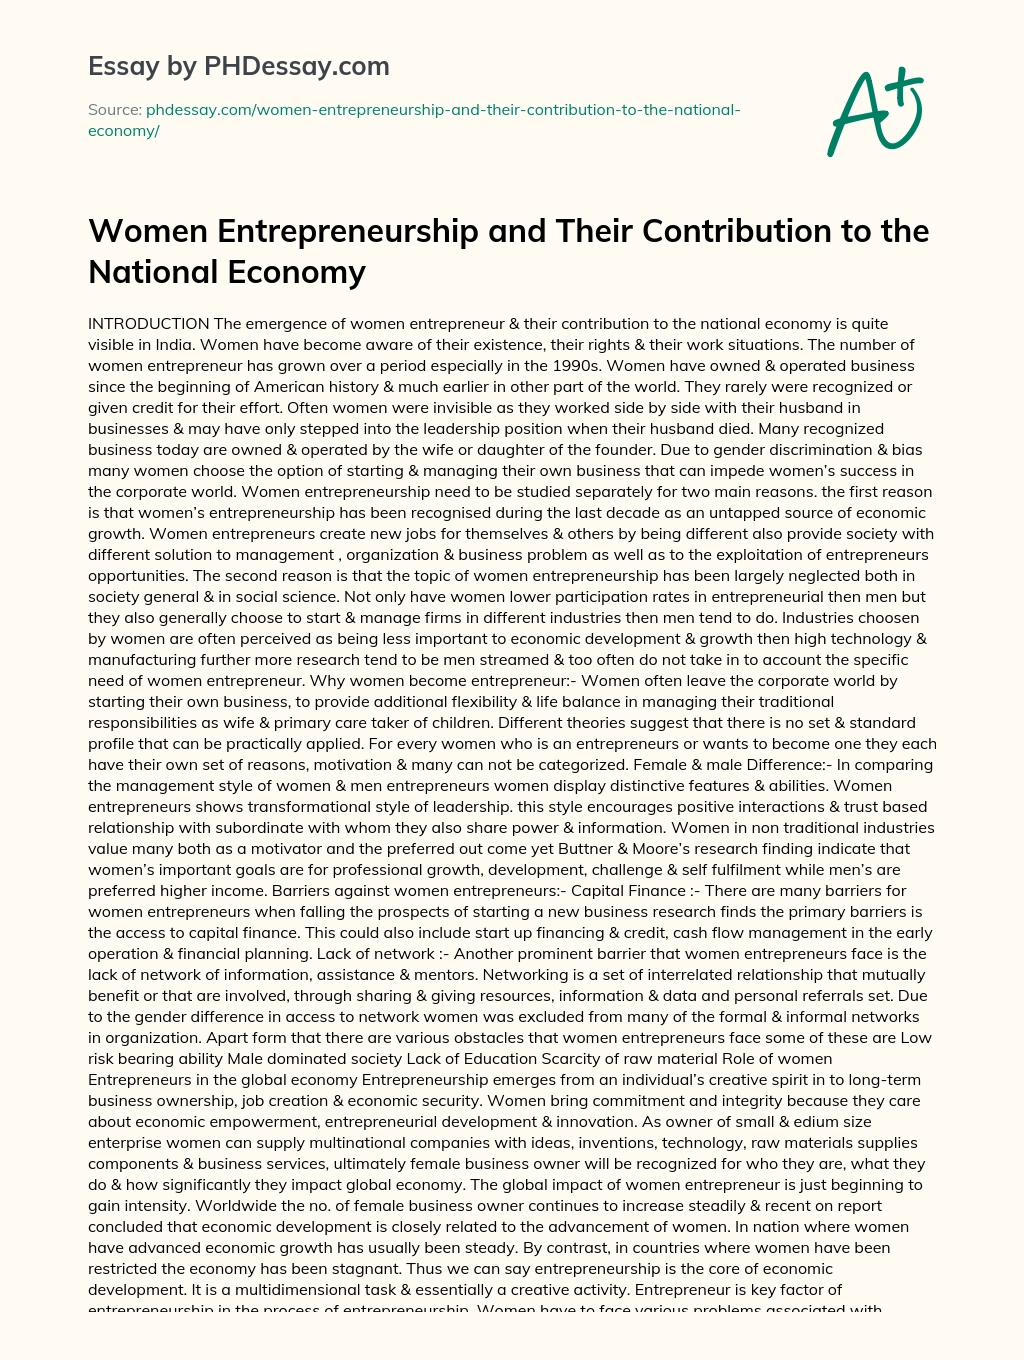 Women Entrepreneurship and Their Contribution to the National Economy essay